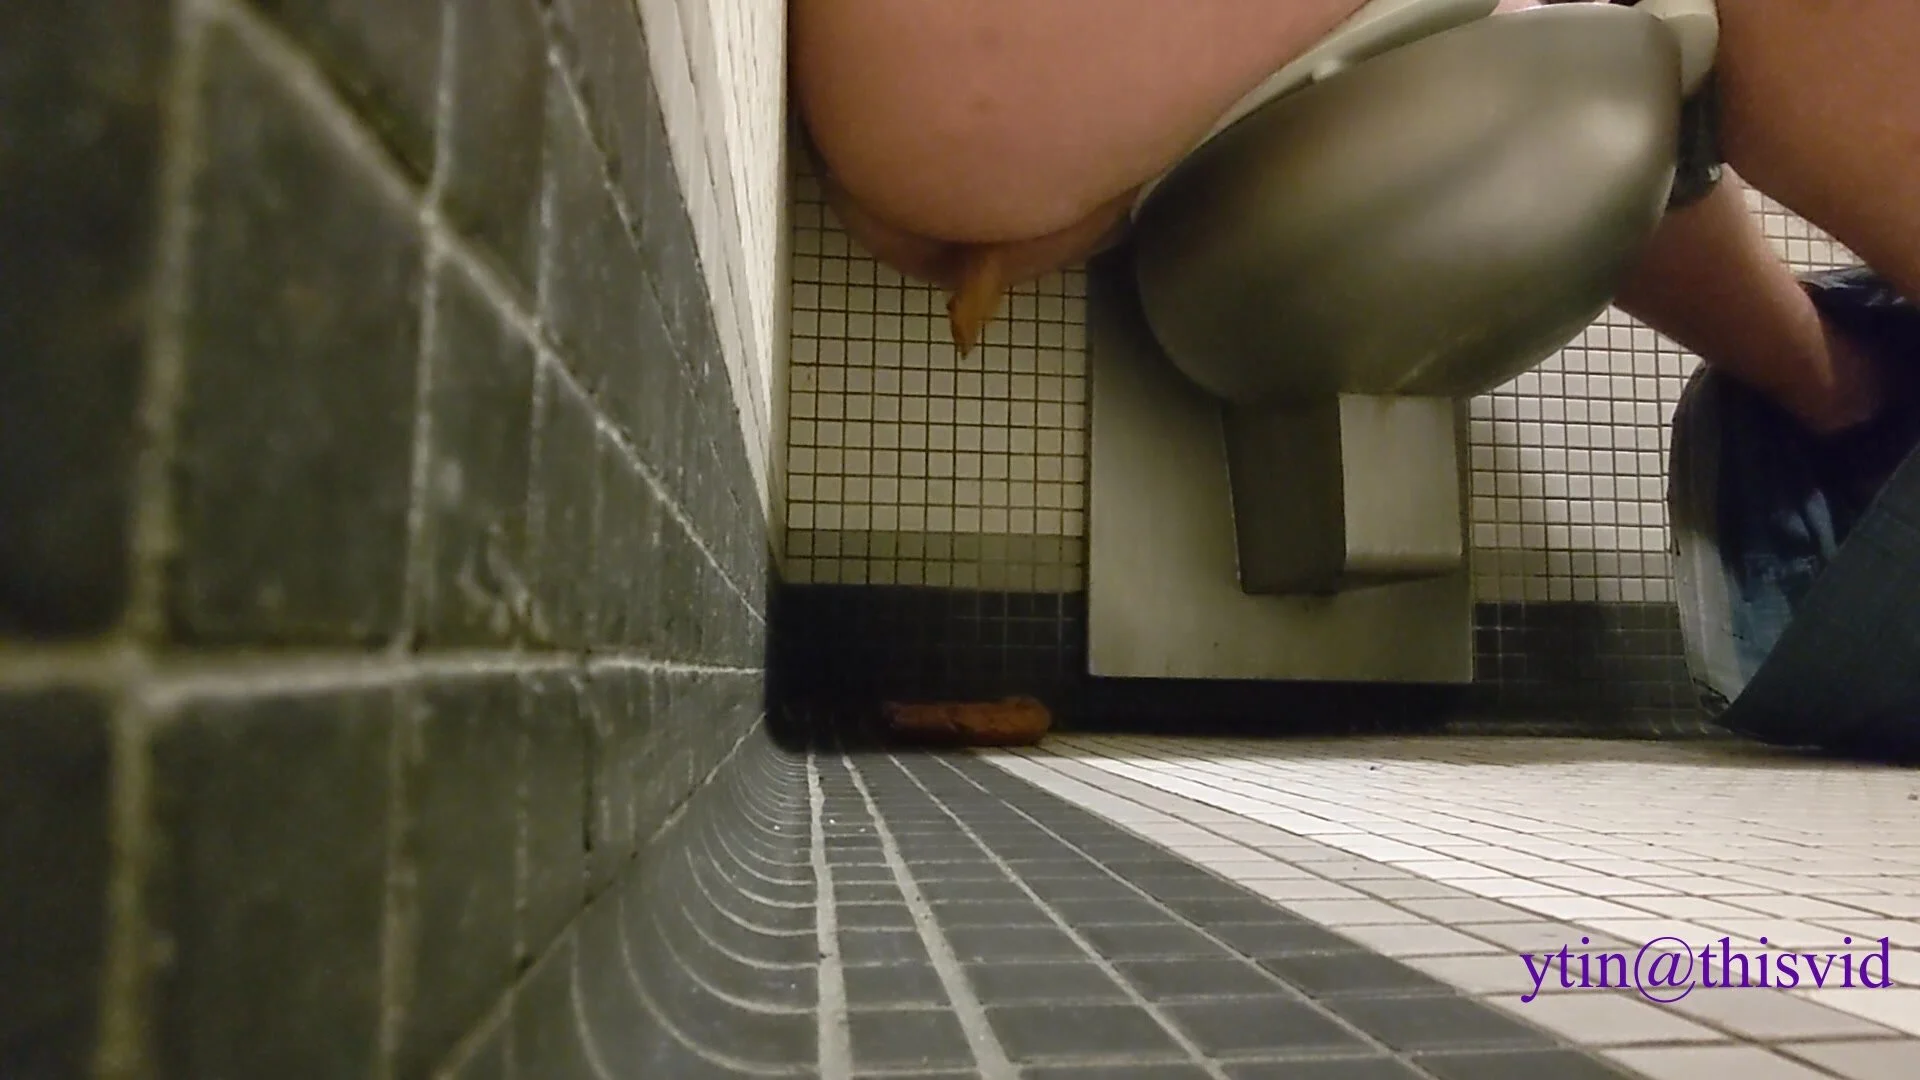 Real Restroom - Sexy man shows it all: Public Restroom Floorâ€¦ ThisVid.com